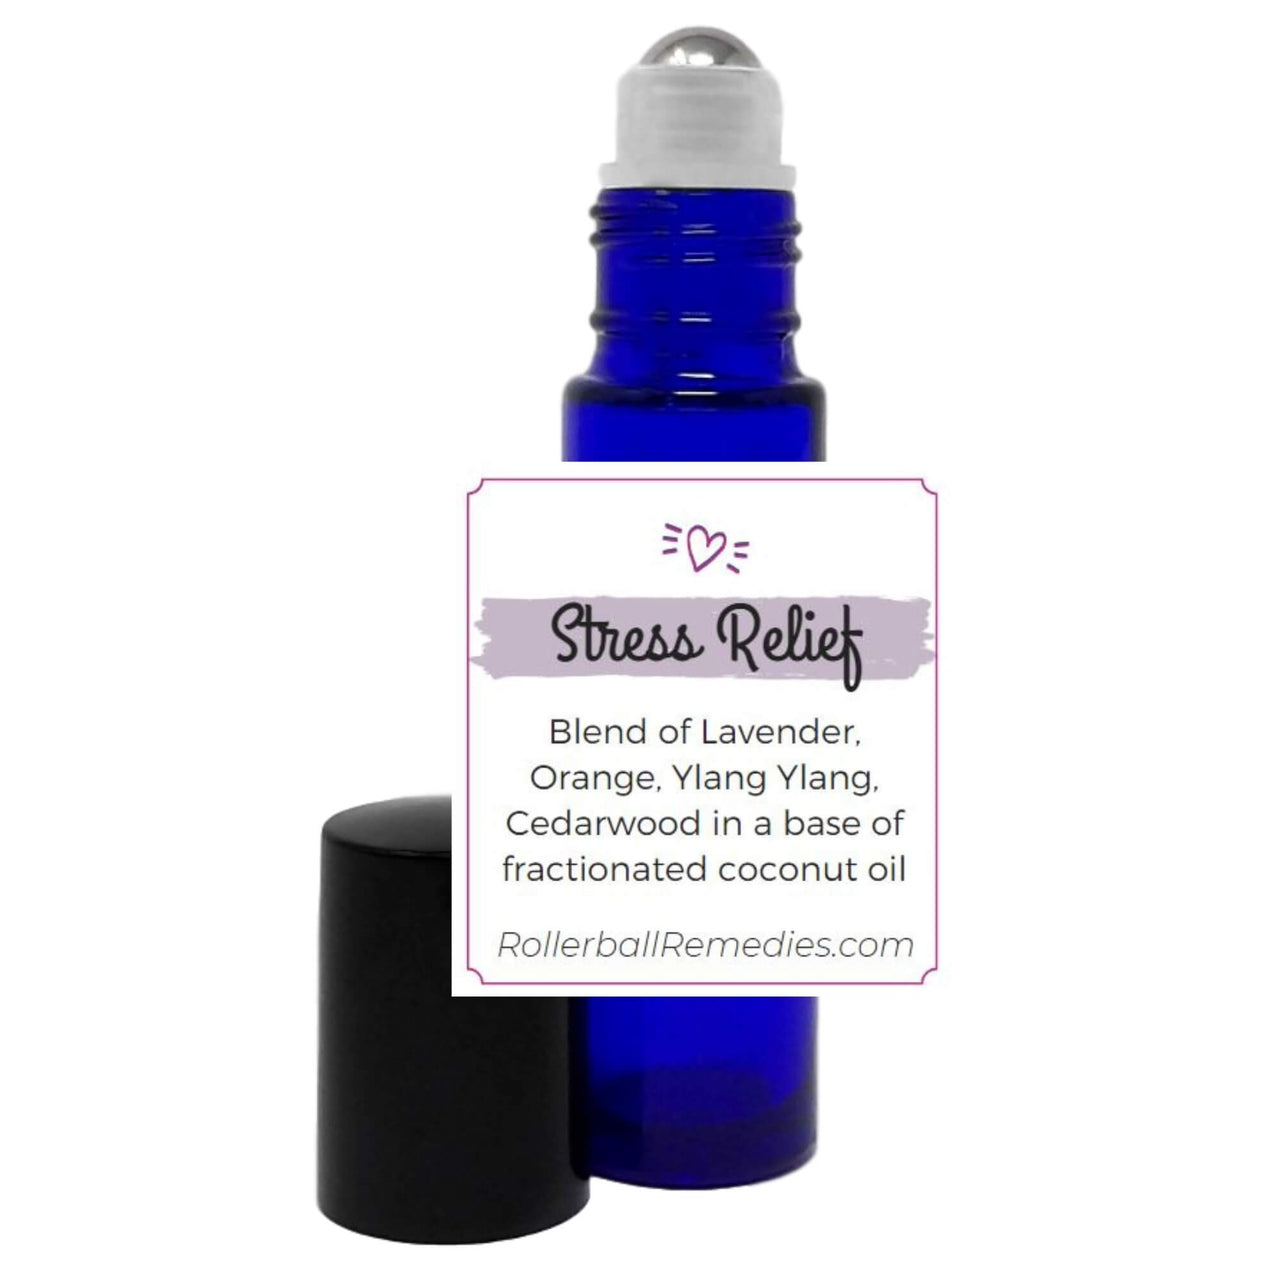 Stress Relief Essential Oil Blend - 10 ml Roller Bottle with Lavender, Orange, Ylang Ylang, and Cedarwood